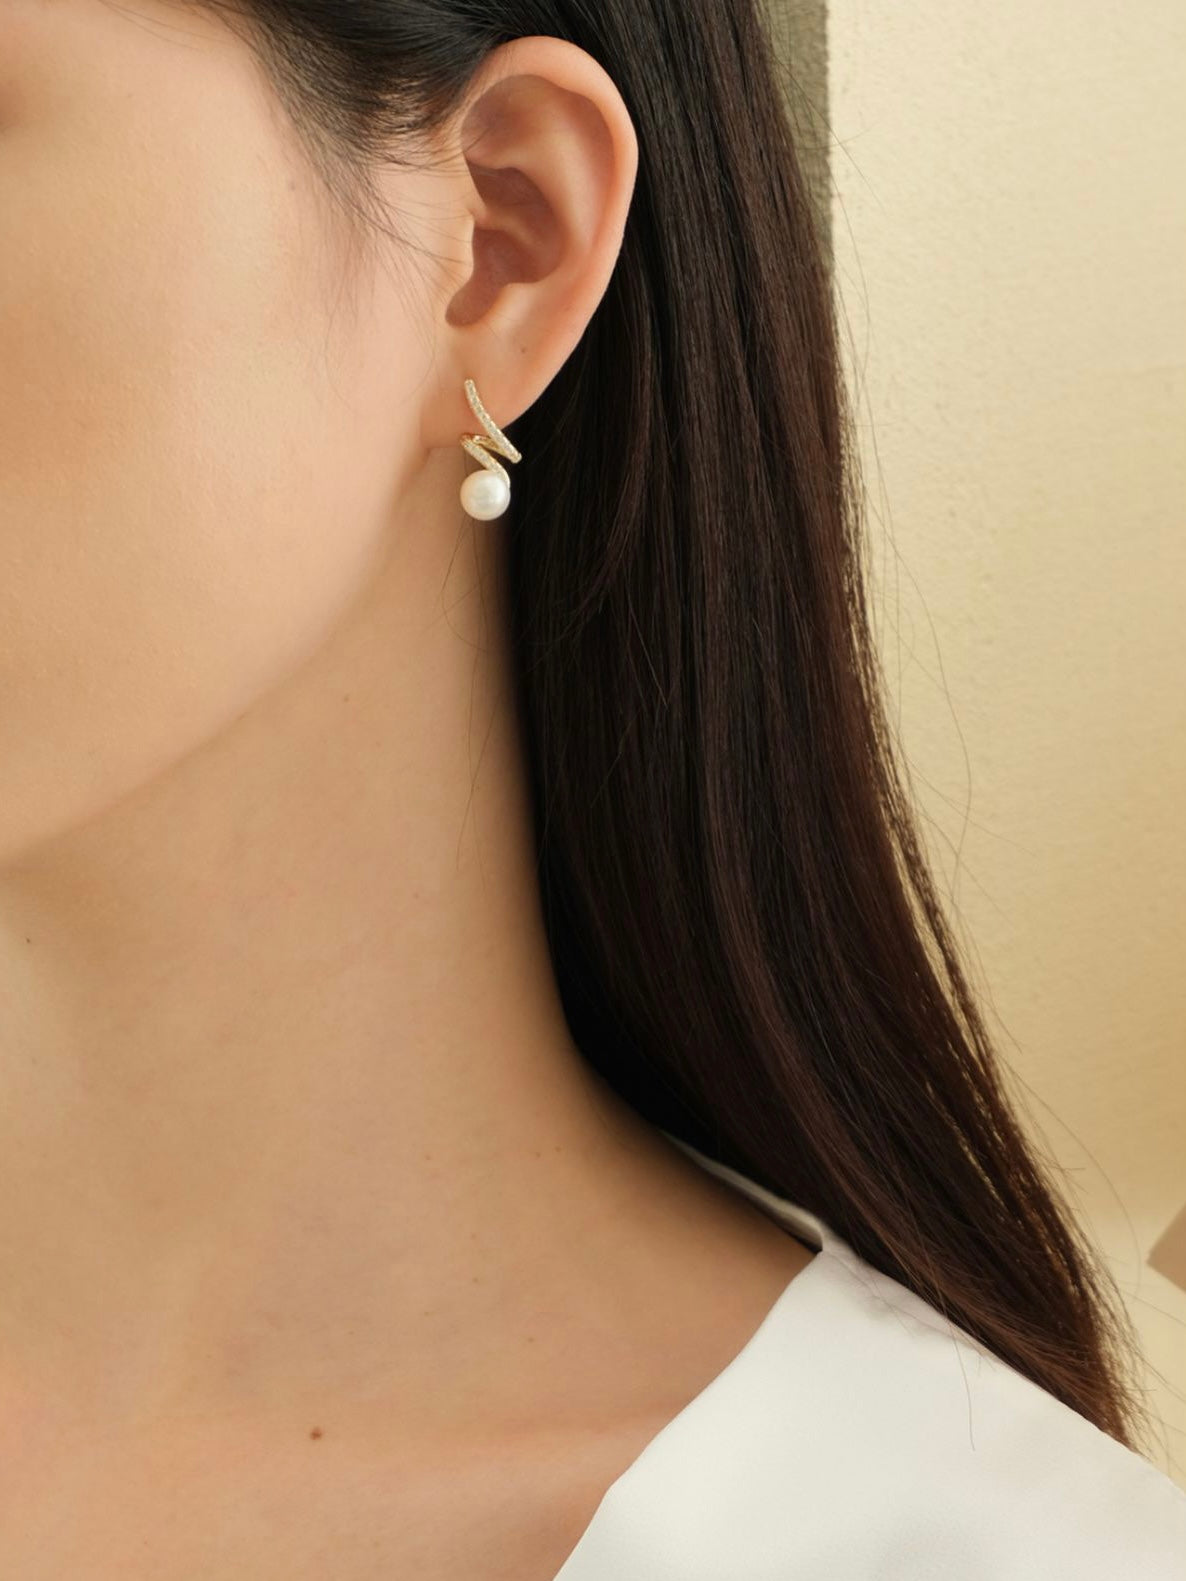 Kosma Earrings | 18k Gold Plated